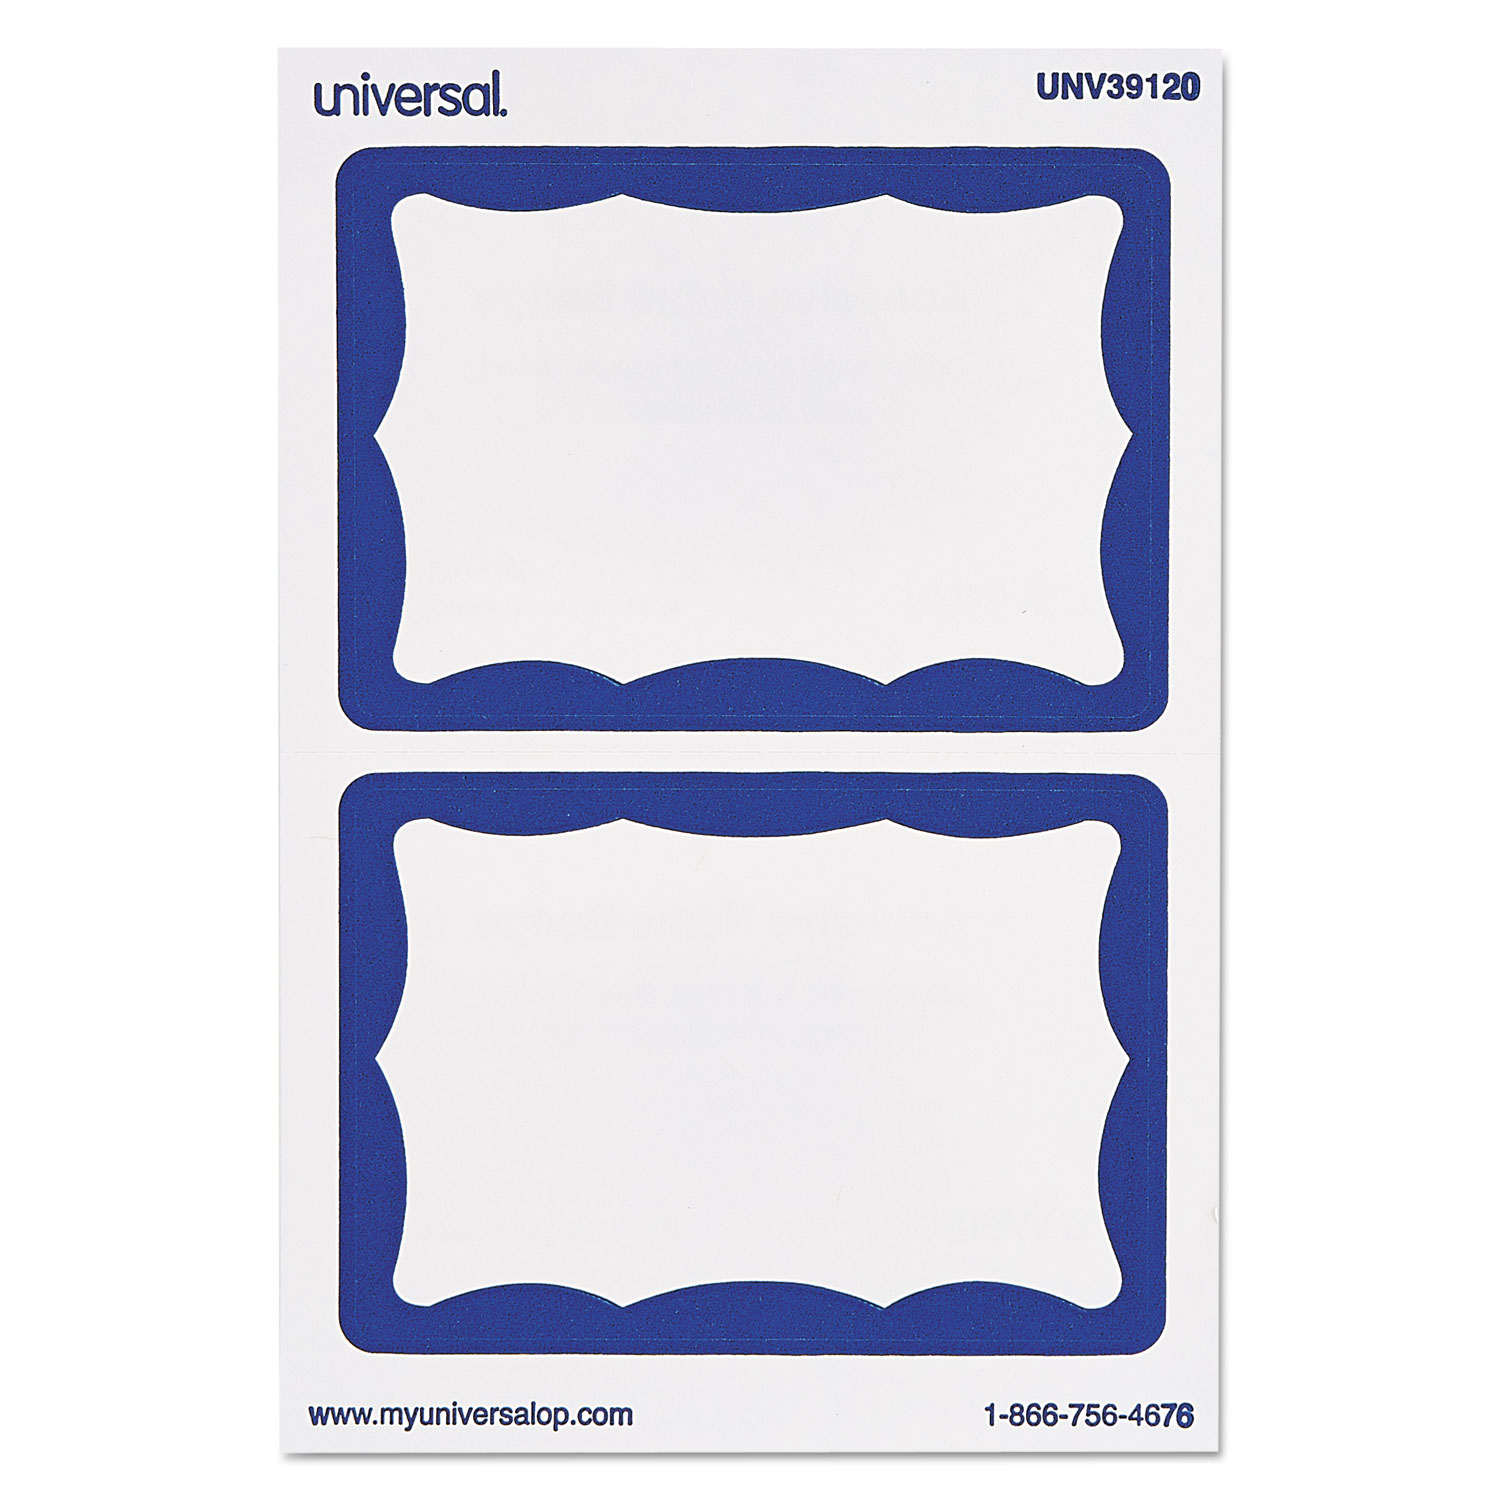 Border-Style Self-Adhesive Name Badges, 3 1/2 x 2 1/4, White/Blue, 100/Pack